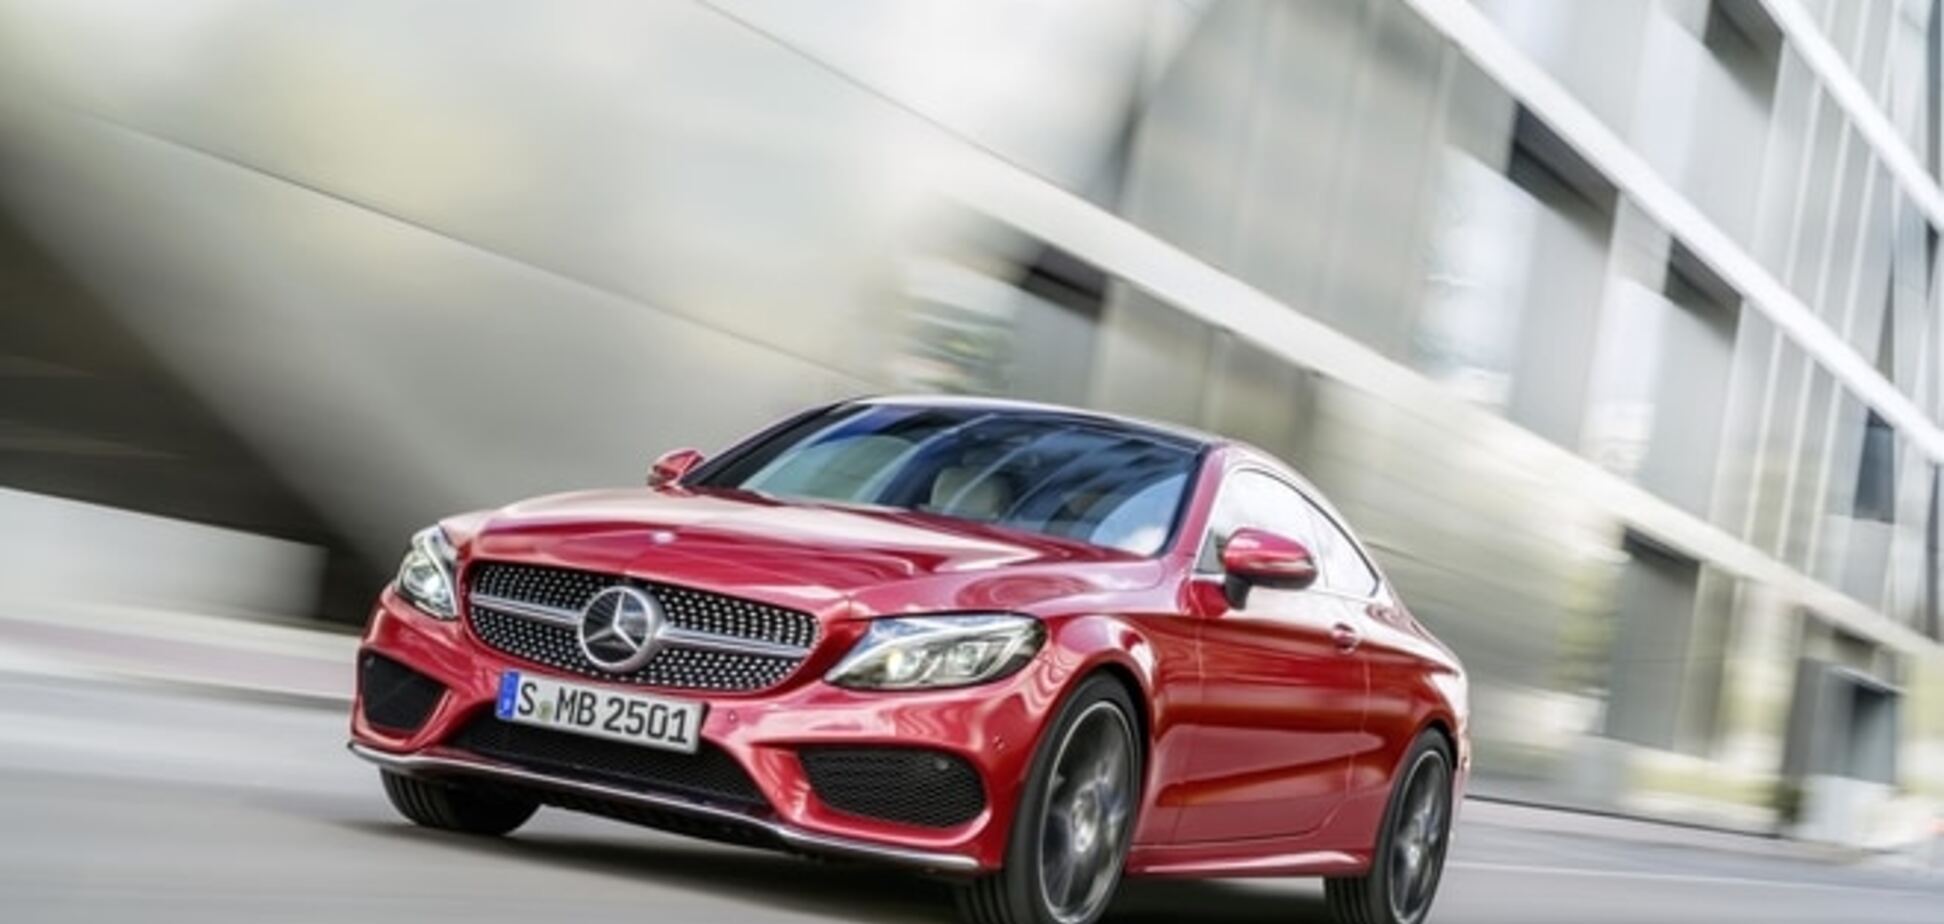 Mercedes-Benz показал новое купе C-class: фото и видео новинки